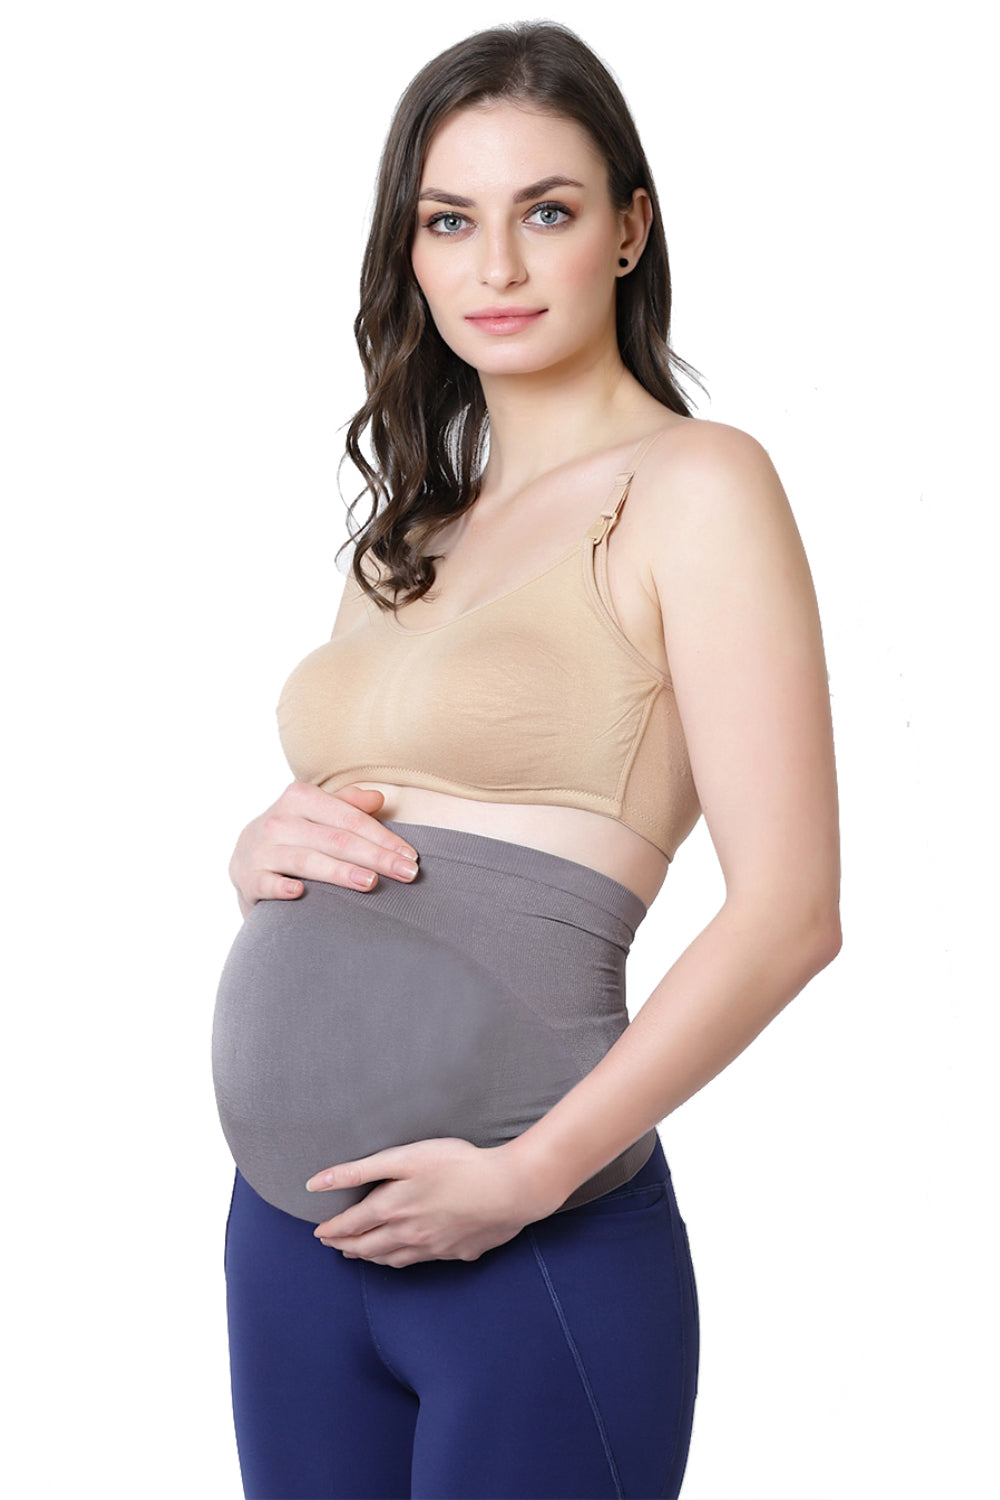 Belly Bands - Hannah Grace Maternity Wear